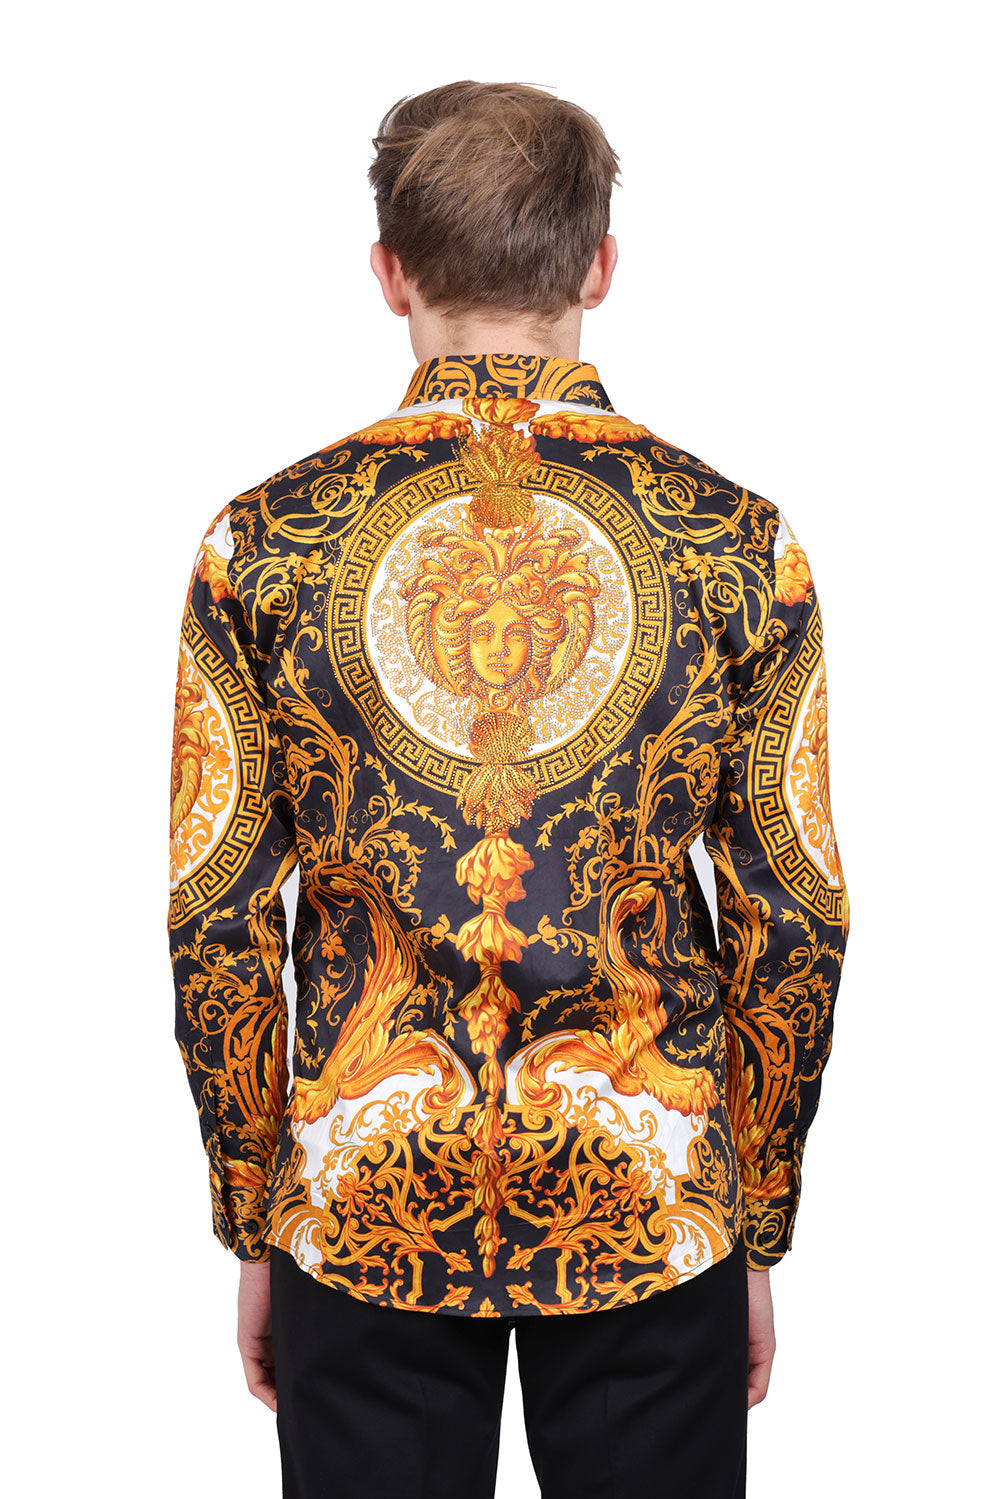 BARABAS Men Medusa Floral Print Design Button Down Luxury Shirt SPR265  Black